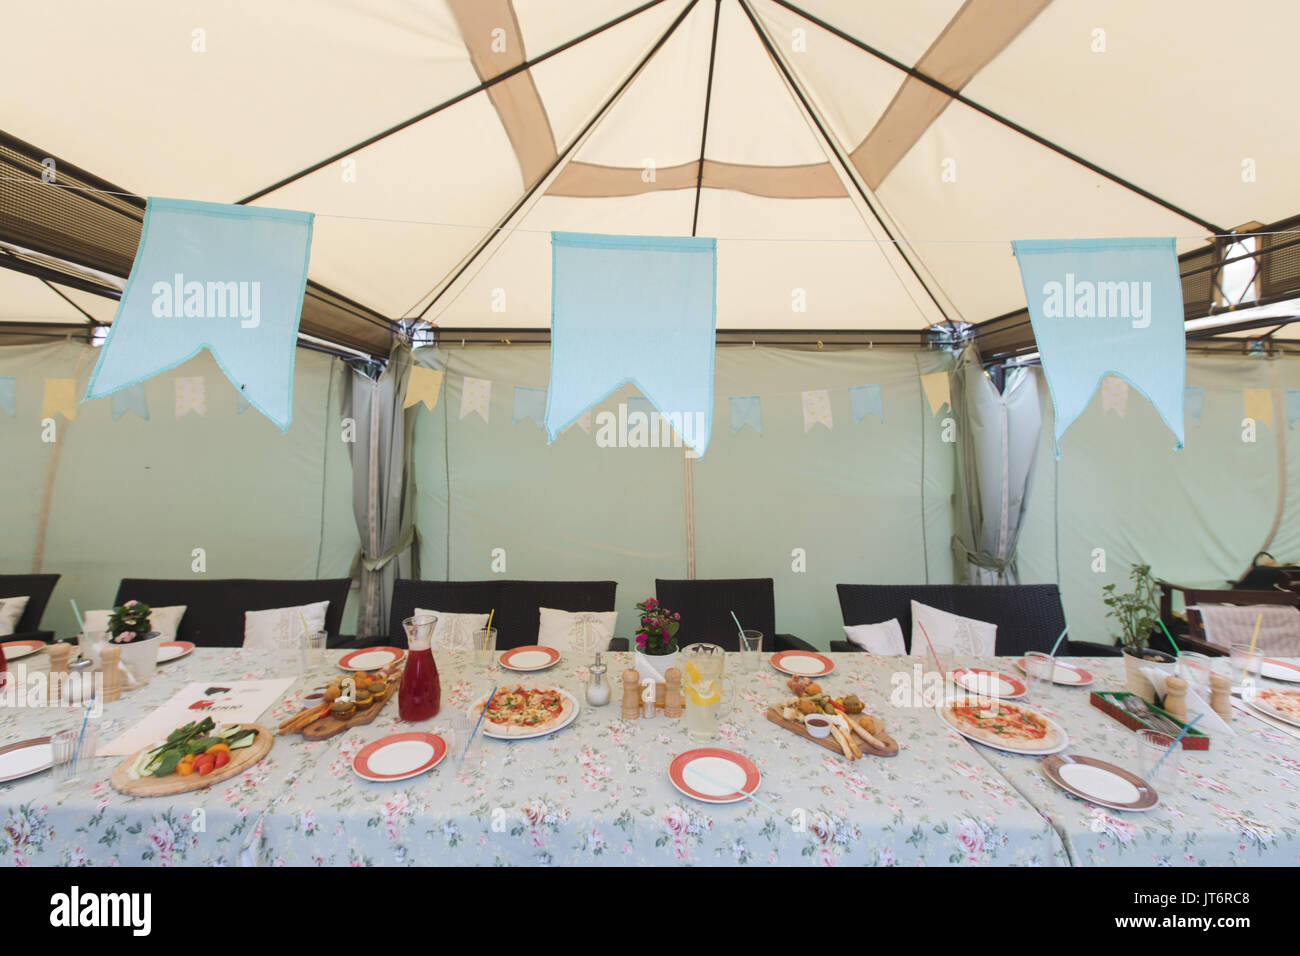 Zelt mit serviert Tabelle innerhalb Stockfoto